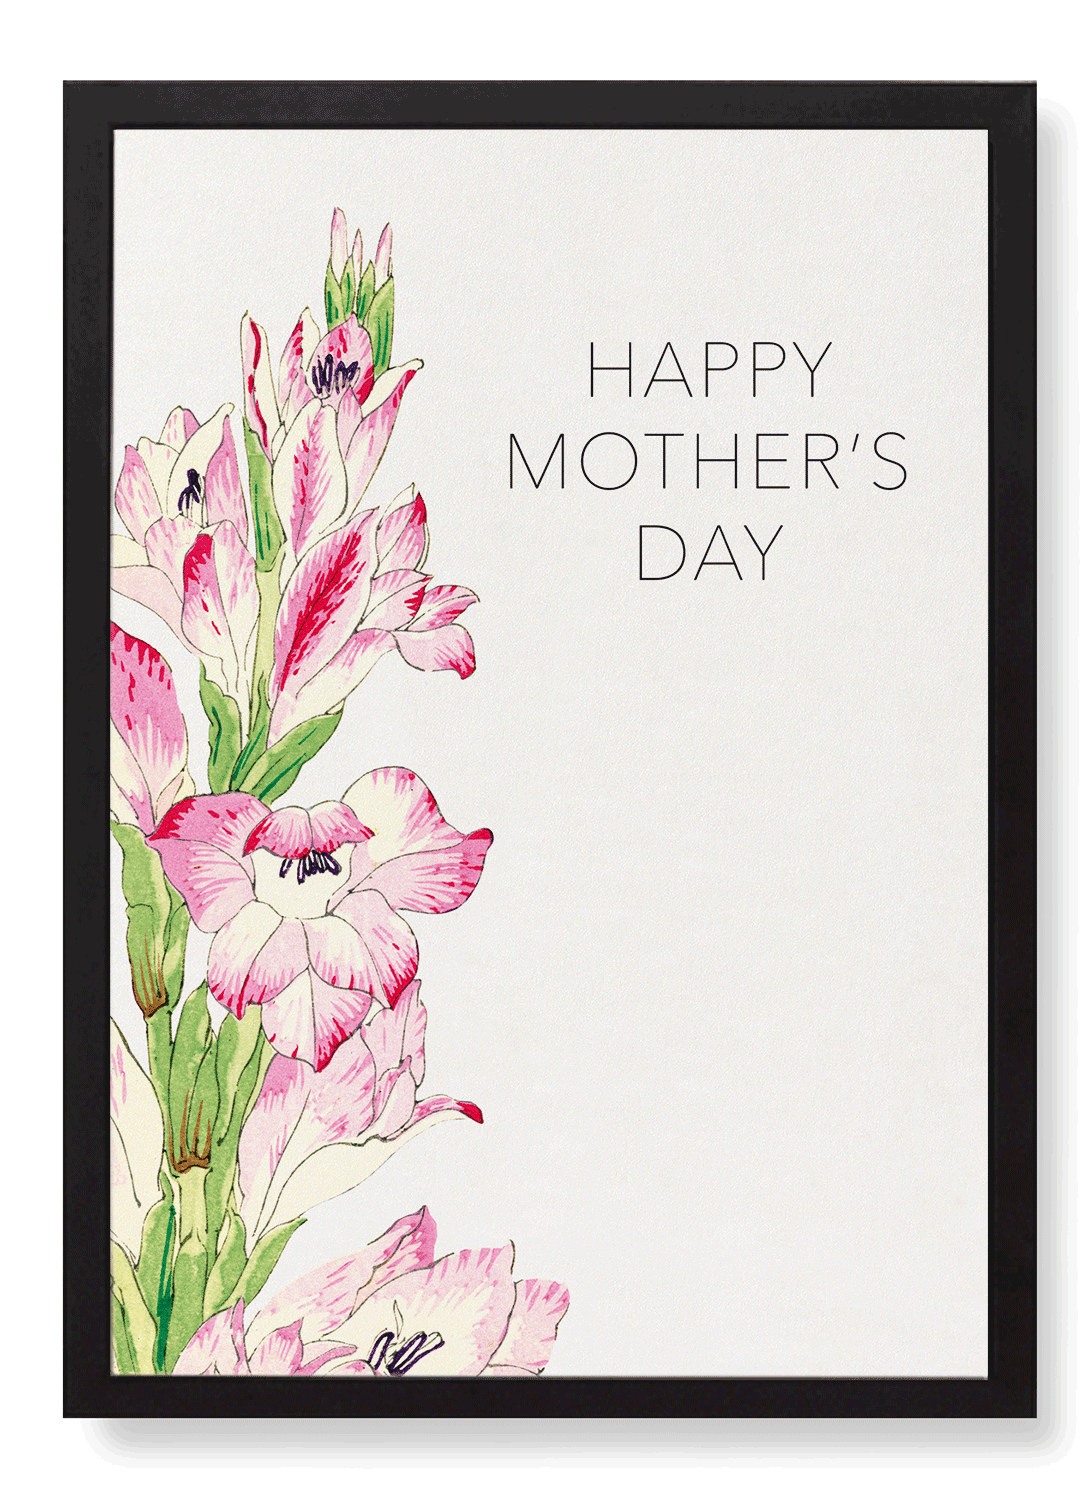 MOTHER’S DAY (GLADIOLUS FLOWER)